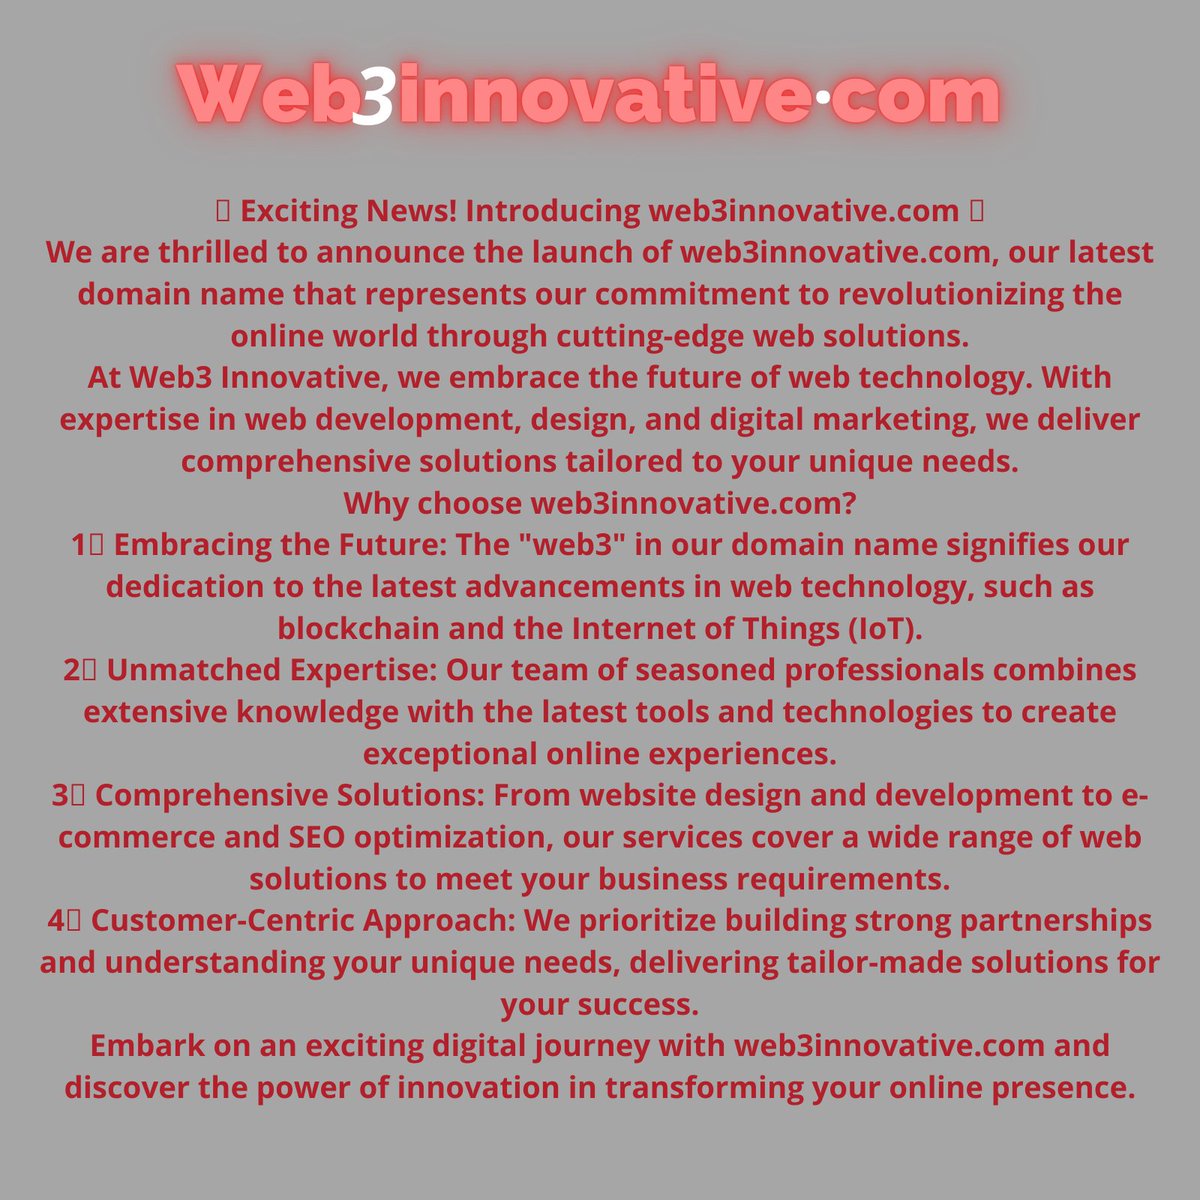 web3innovative.com for  sale
#web3innovative #webdevelopment #webdesign #digitalmarketingservice #web3innovative #webdevelopment #webdesign #blockchain #IoT #onlinesolutions #cuttingedge #digitaltransformation #innovation #webtechnology #digitalstrategy #webdeveloper #SEO